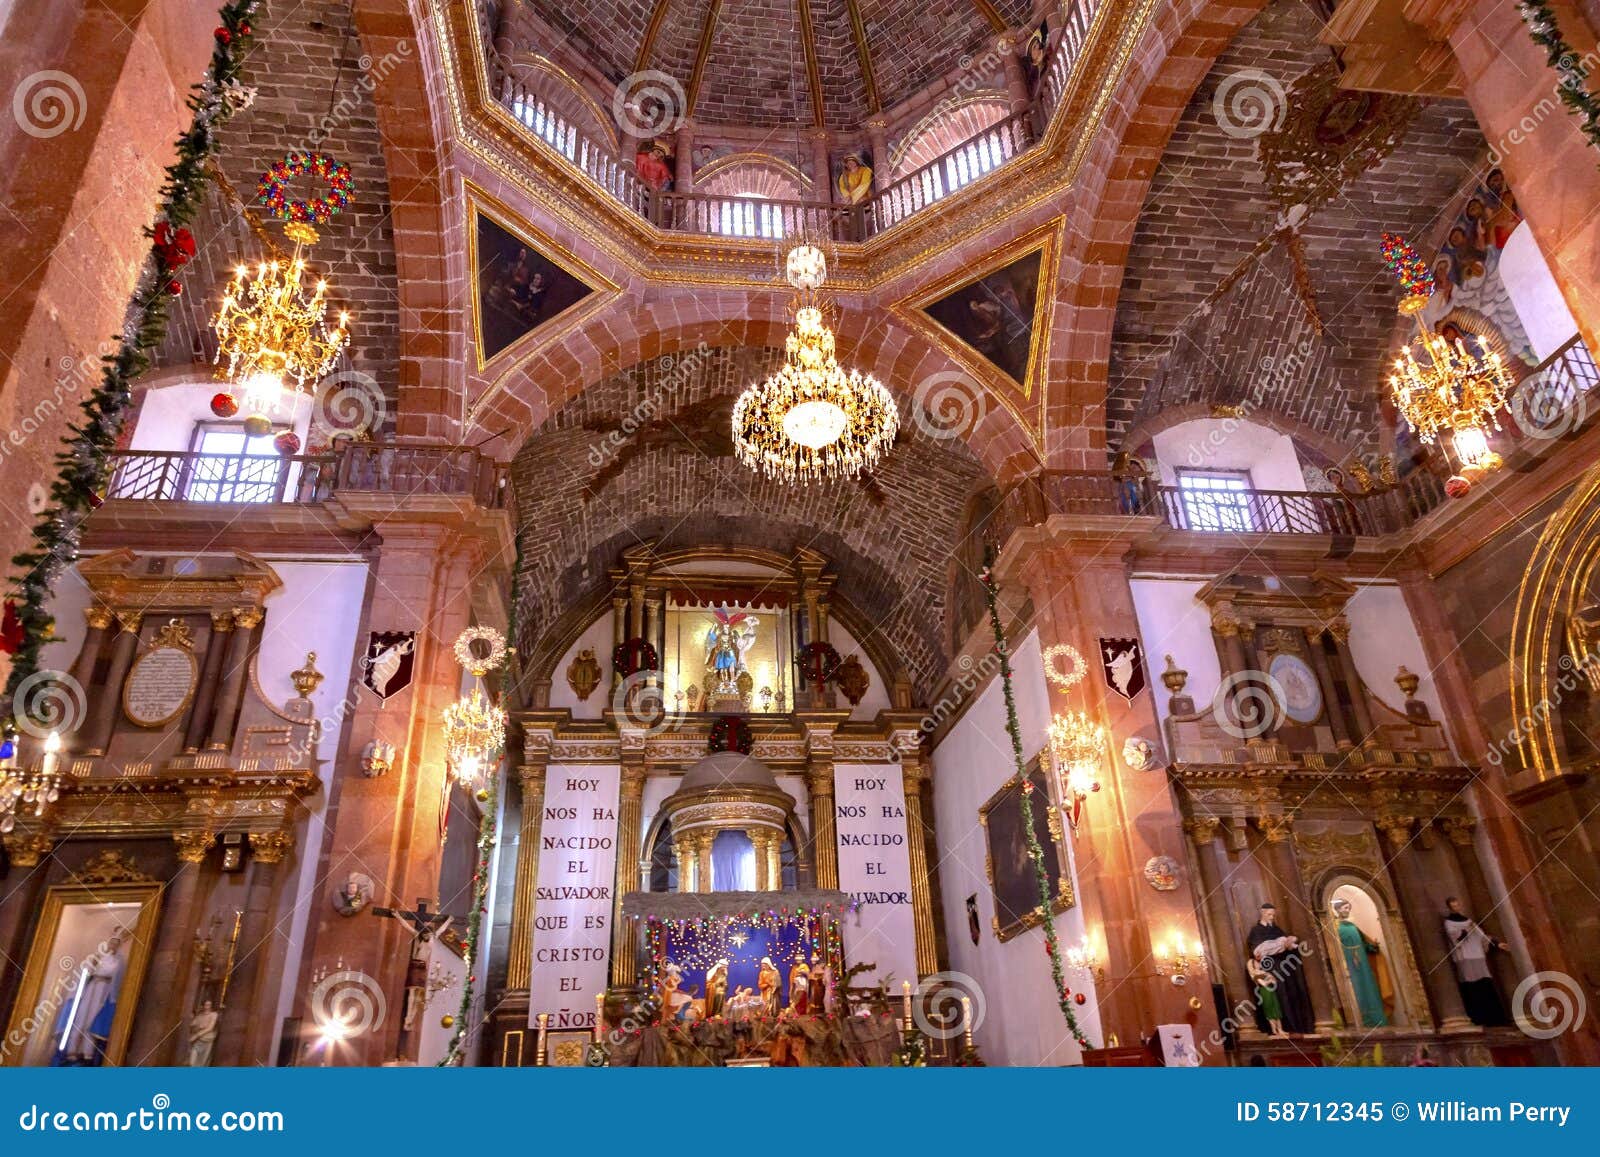 basilica parroquia church san miguel de allende mexico